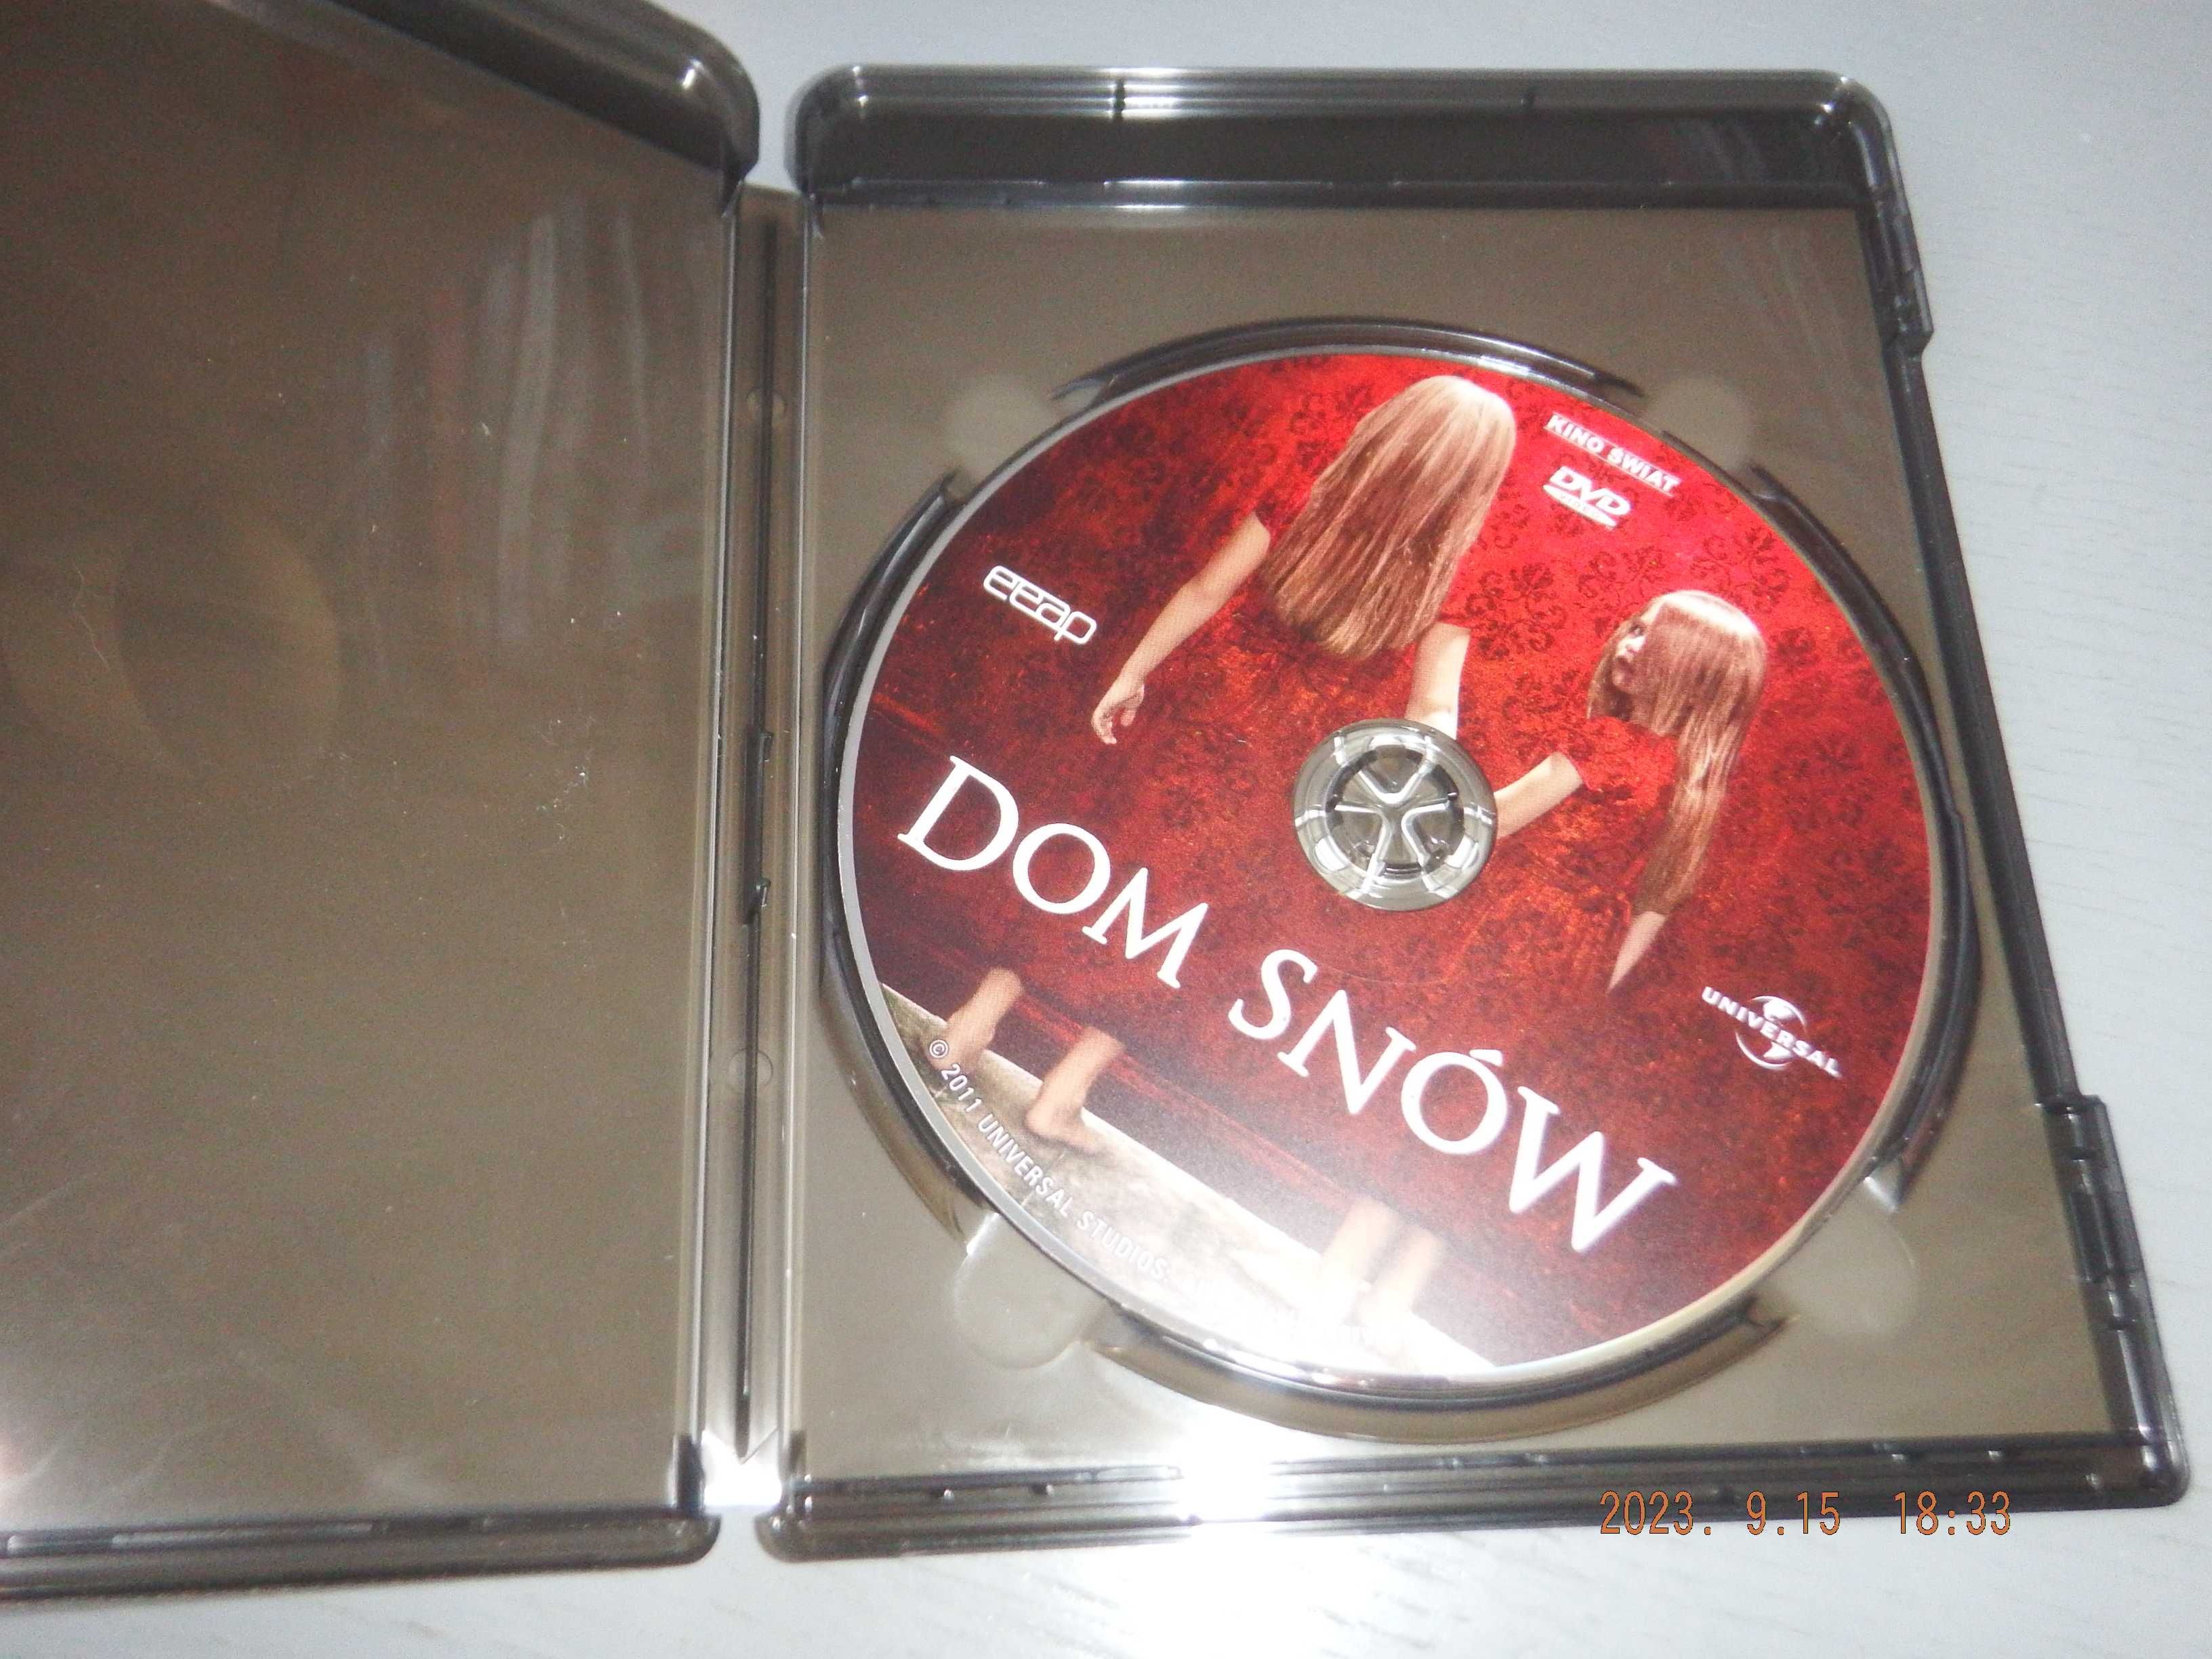 Dom snow dvd   D.CRAIG  PL